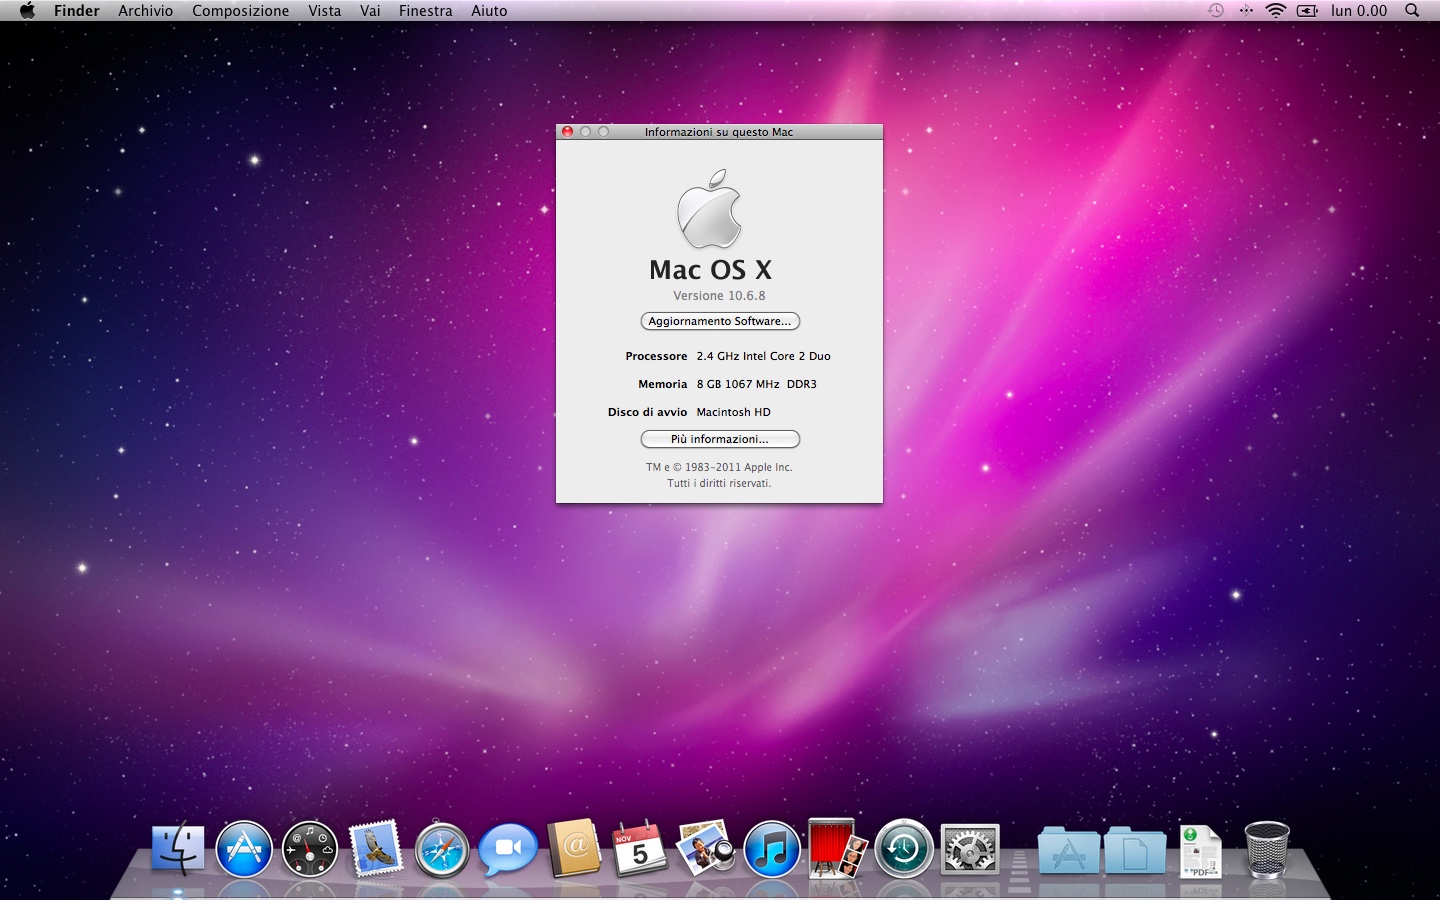 Mac OS X 10.6 Snow Leopard About Dialog (Italian) (2009)